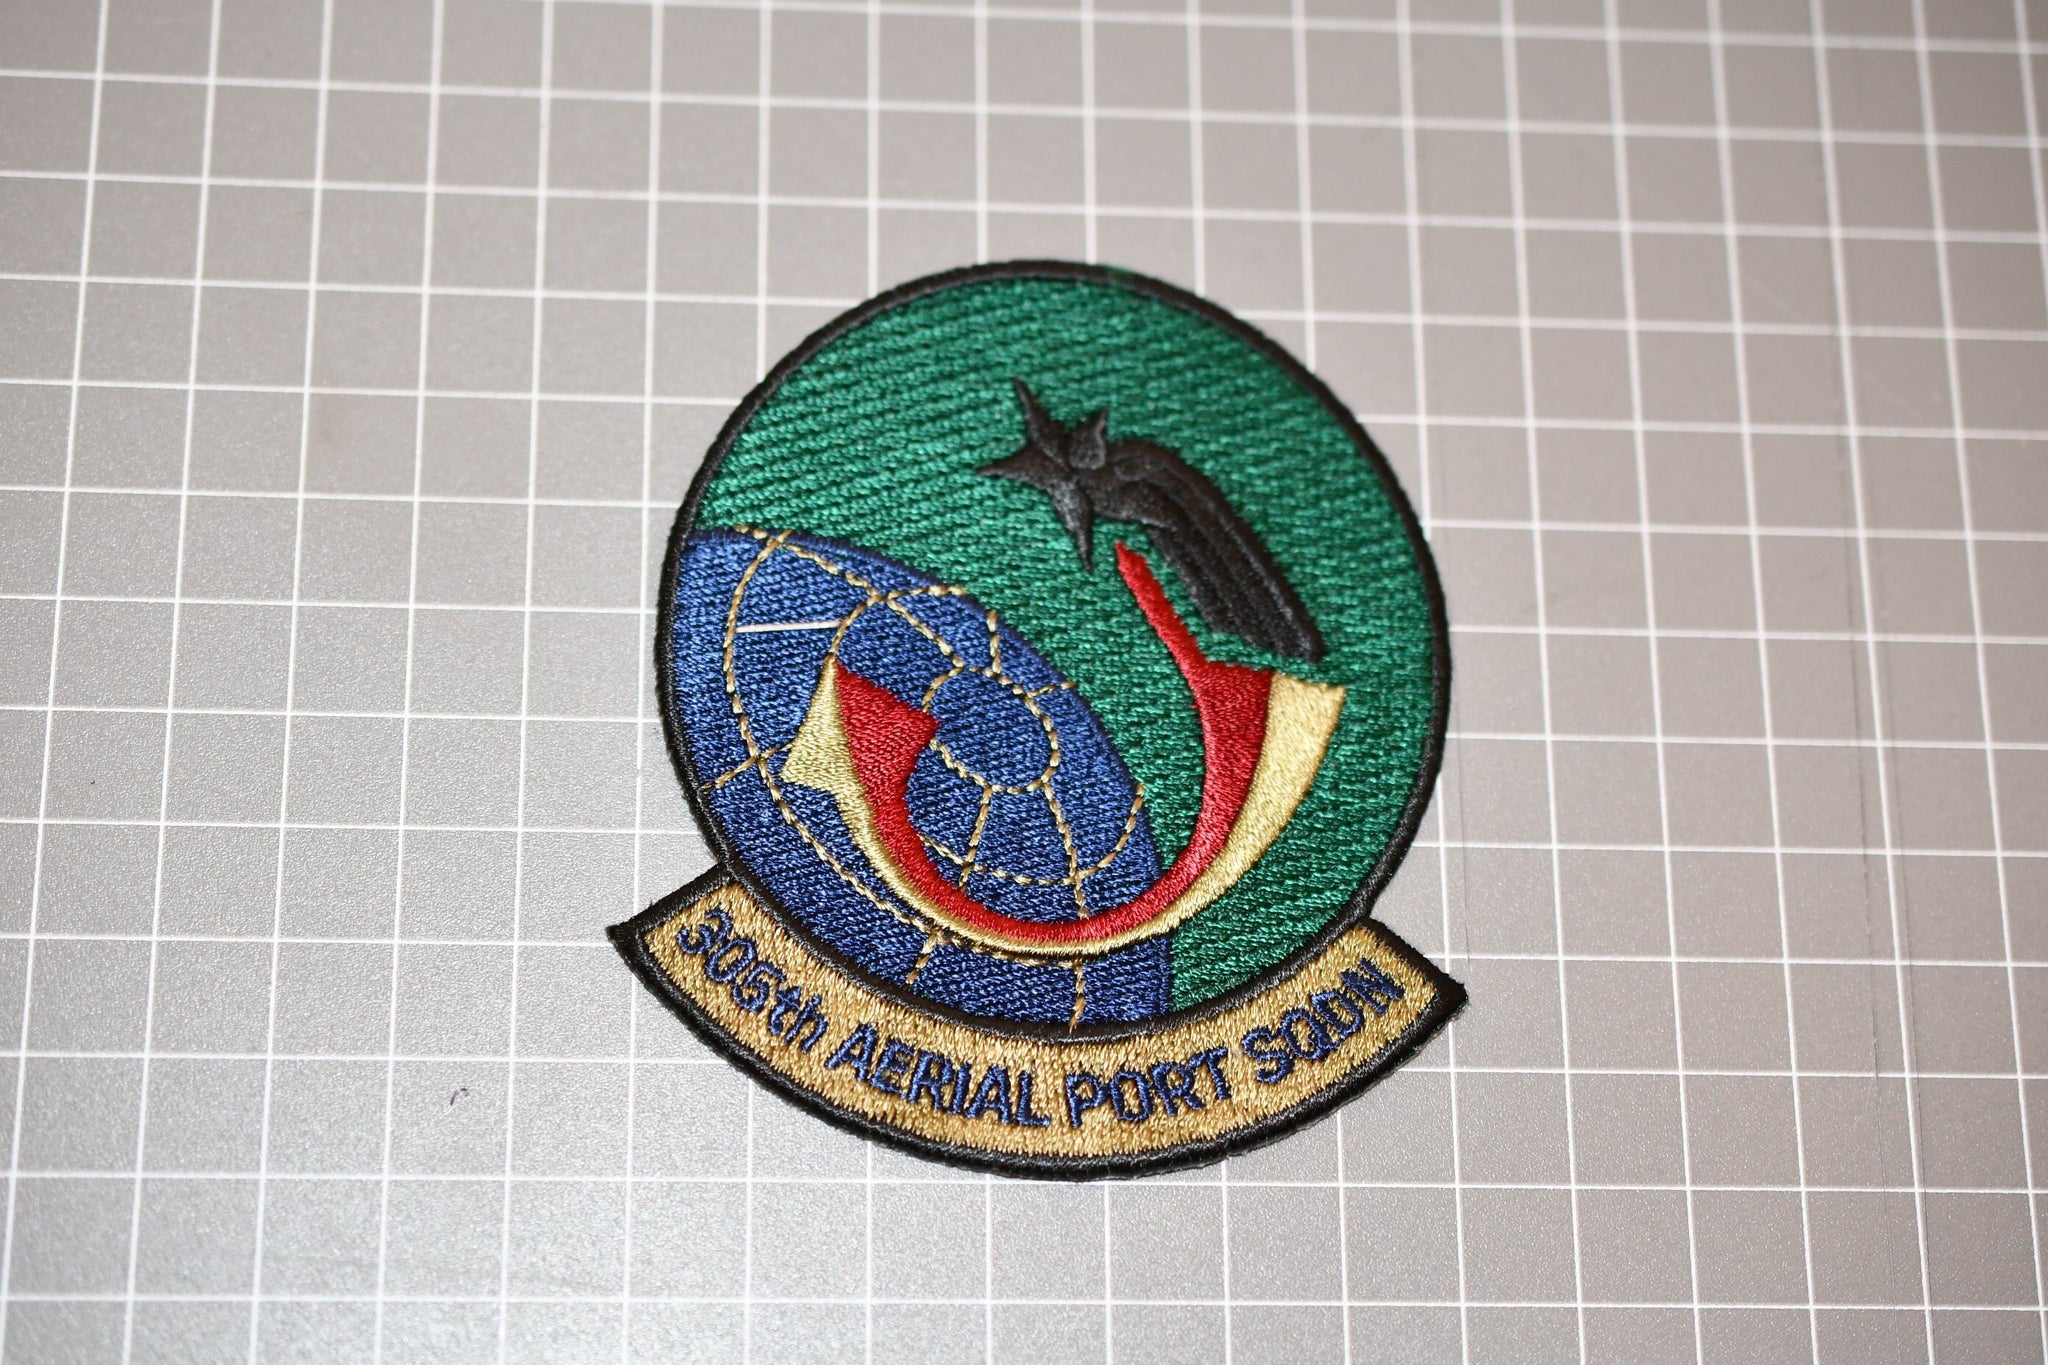 USAF 305th Aerial Port Squadron Patch (B21-144)